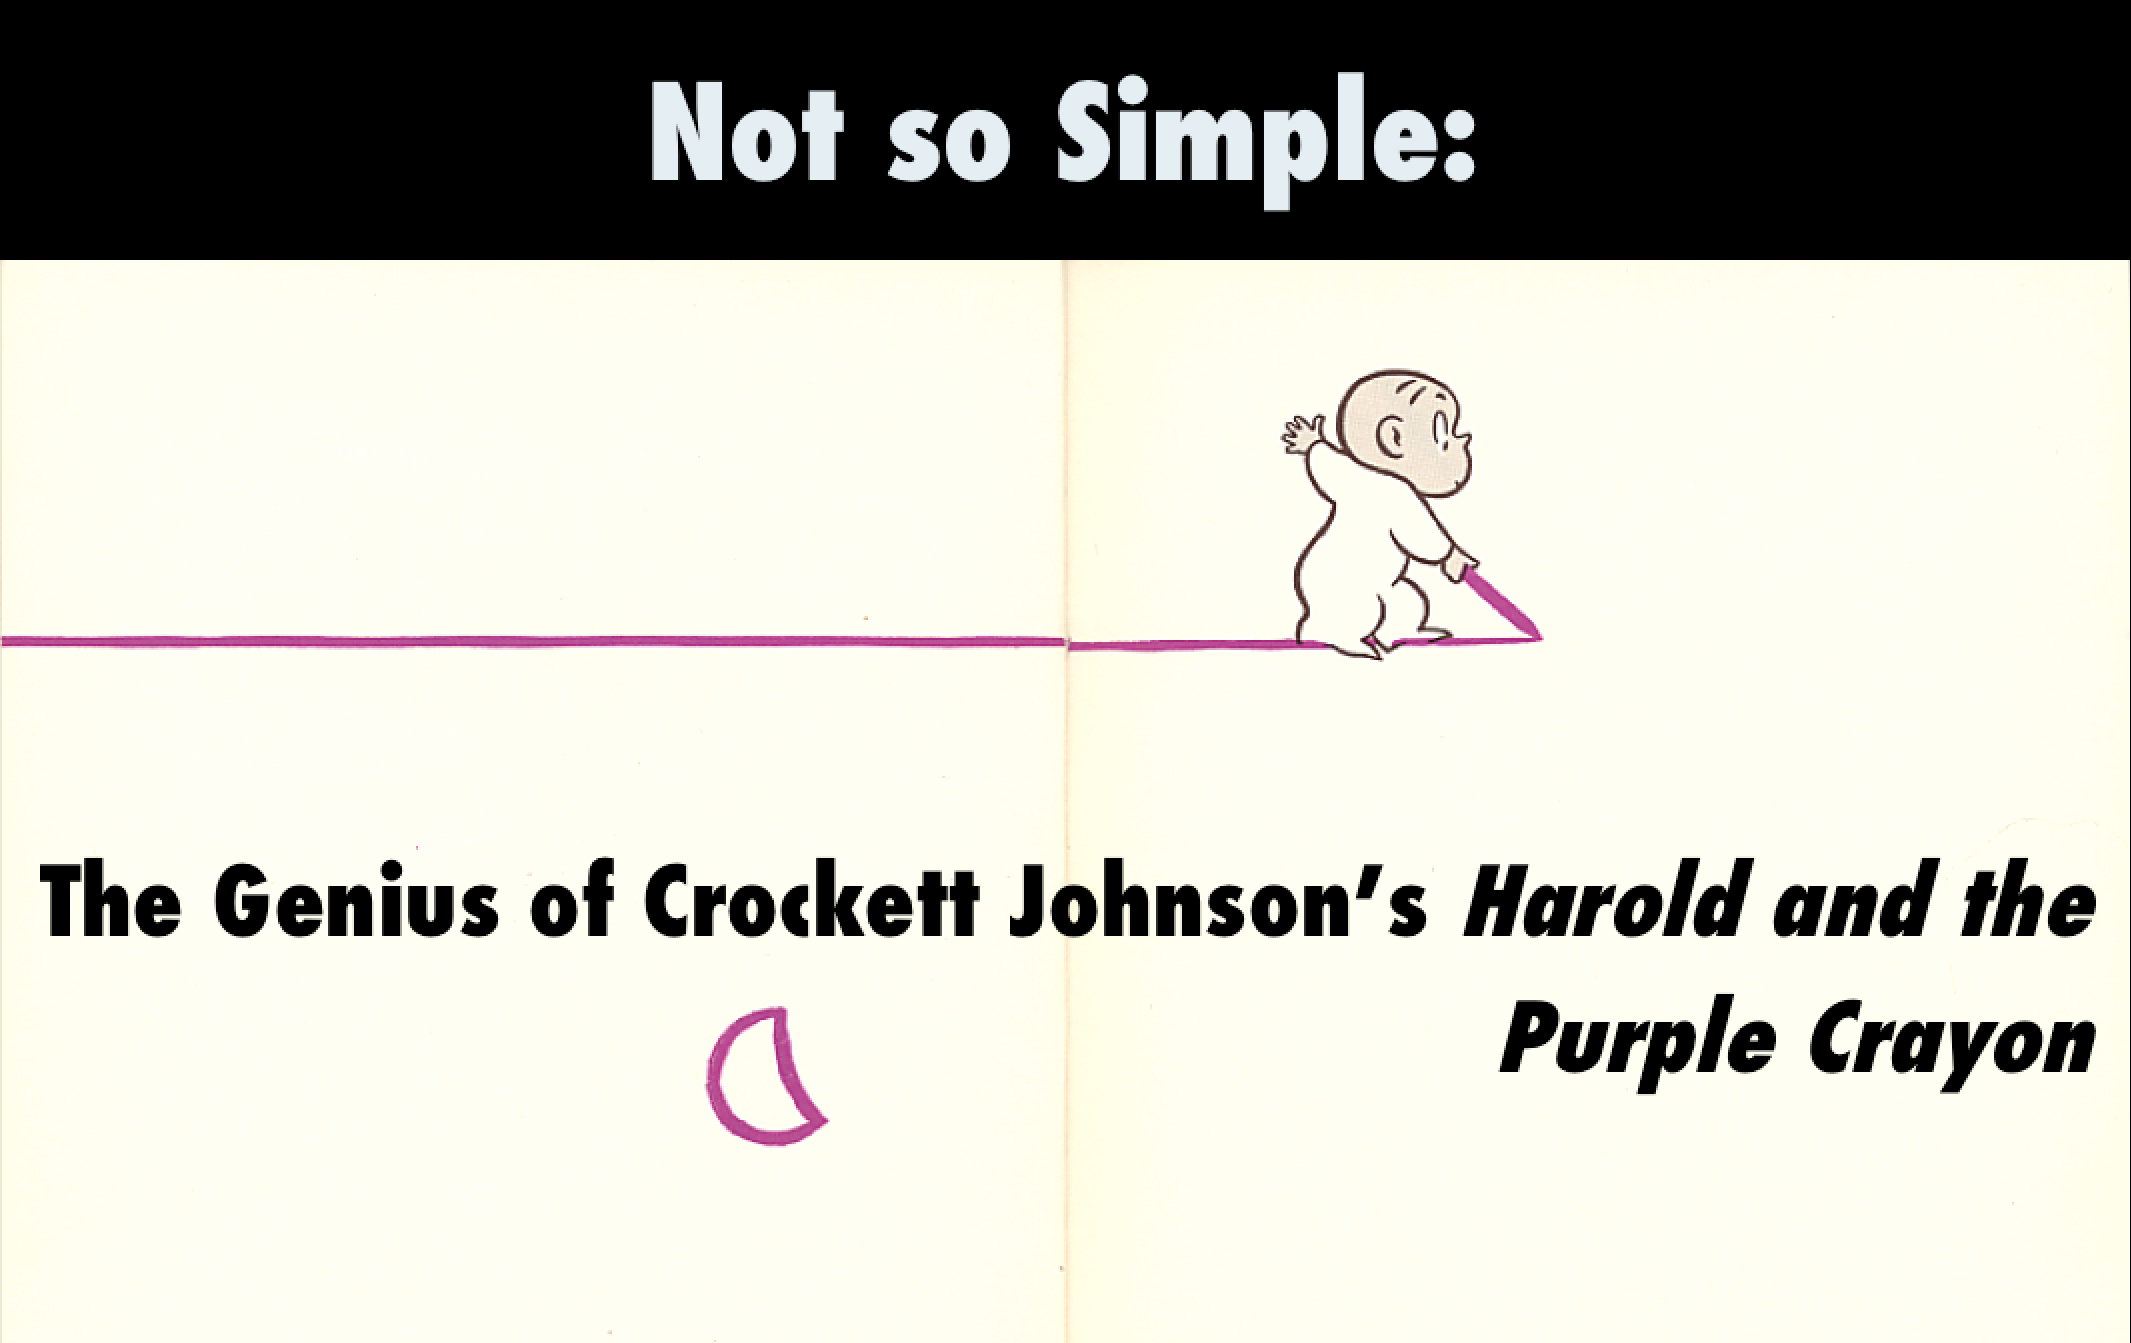 Not So Simple: The Genius of Crockett Johnson's Harold and the Purple Crayon